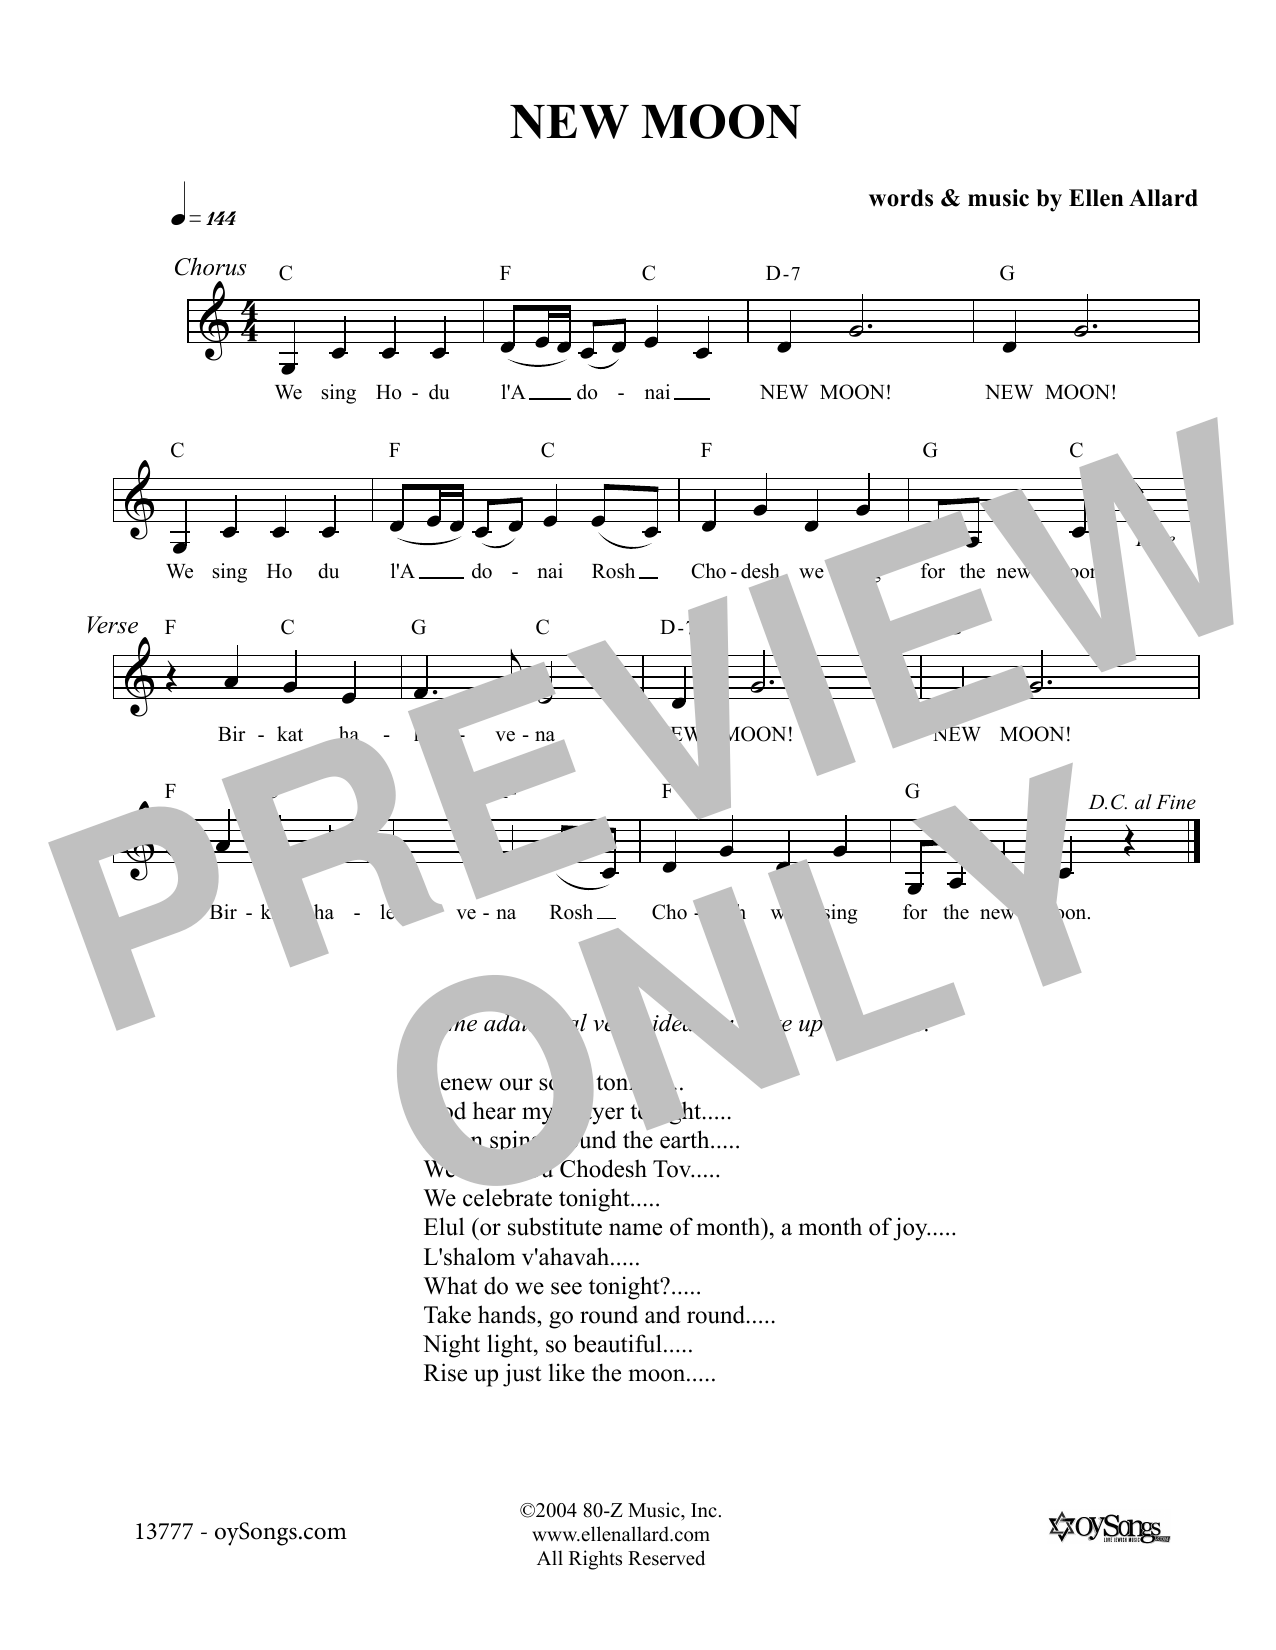 Ellen Allard New Moon Sheet Music Notes & Chords for Melody Line, Lyrics & Chords - Download or Print PDF